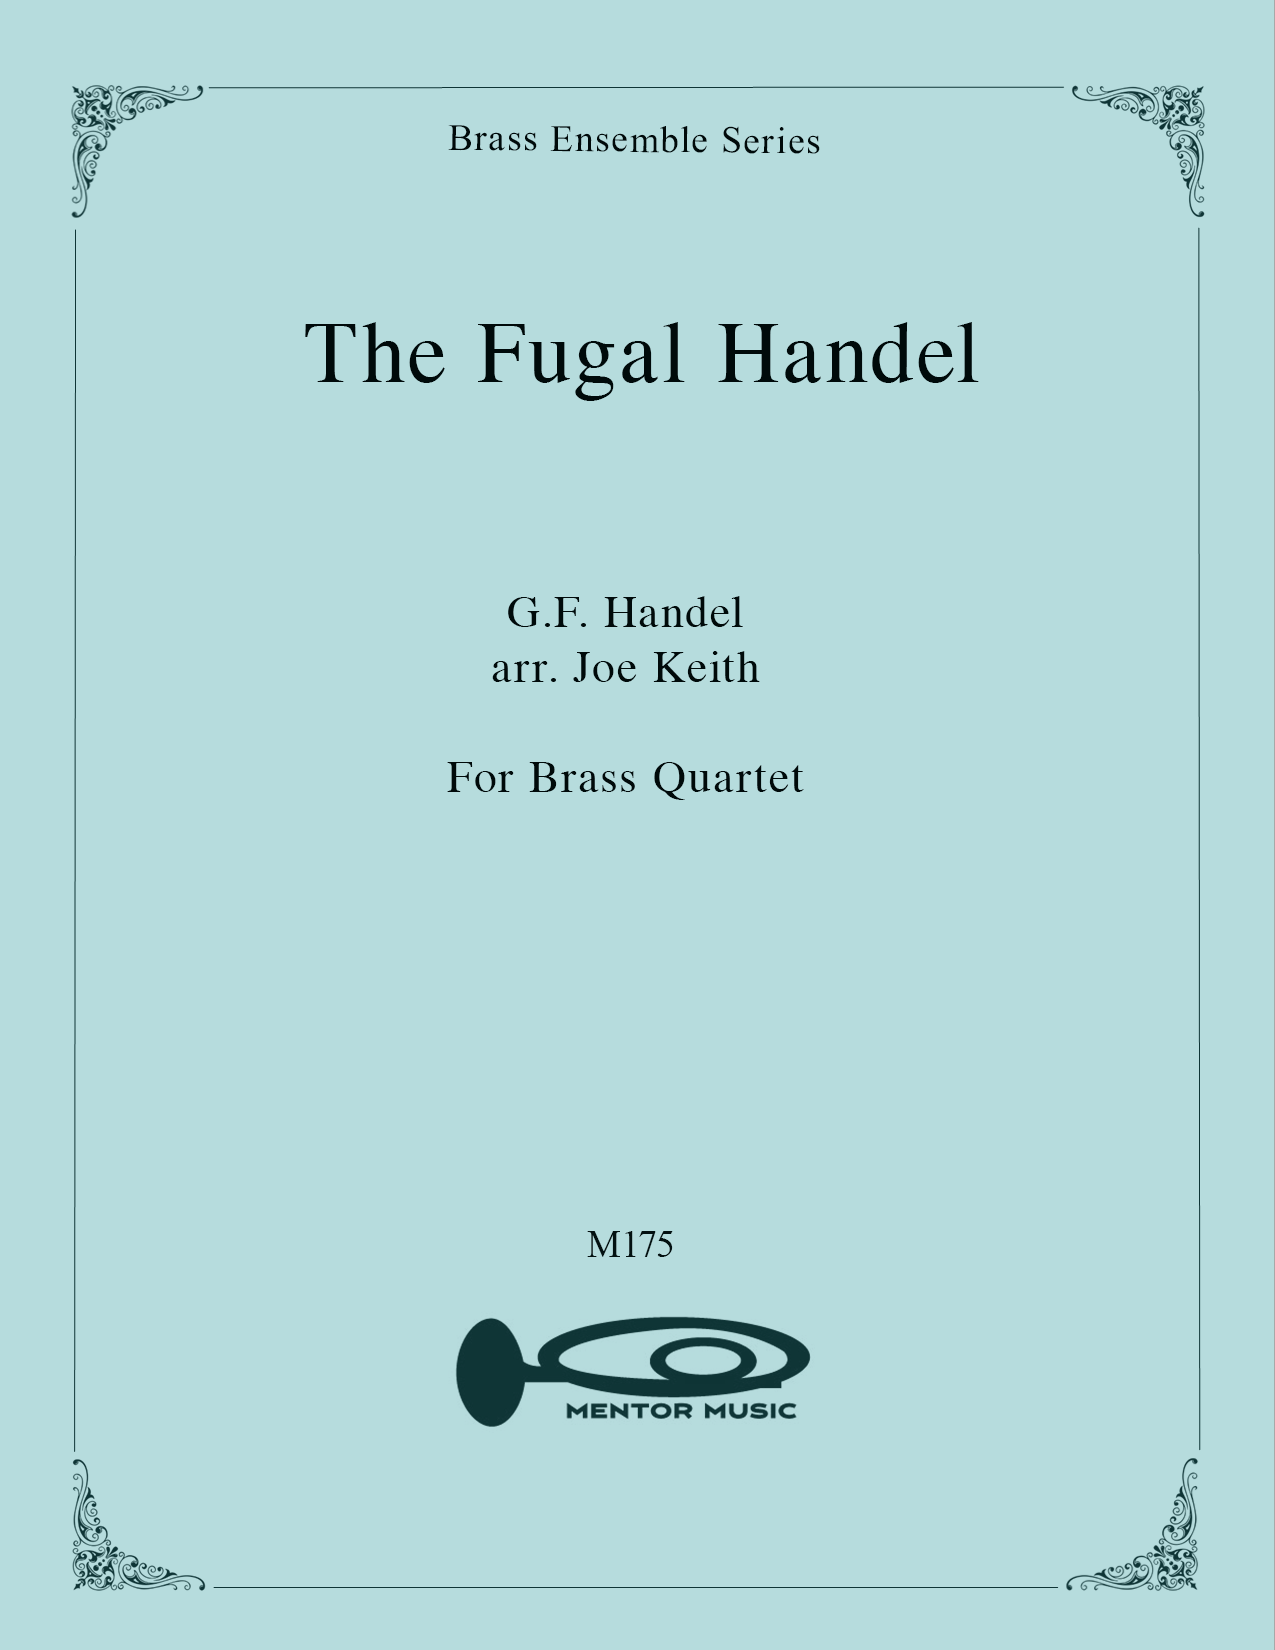 The Fugal Handel, for Brass Quartet